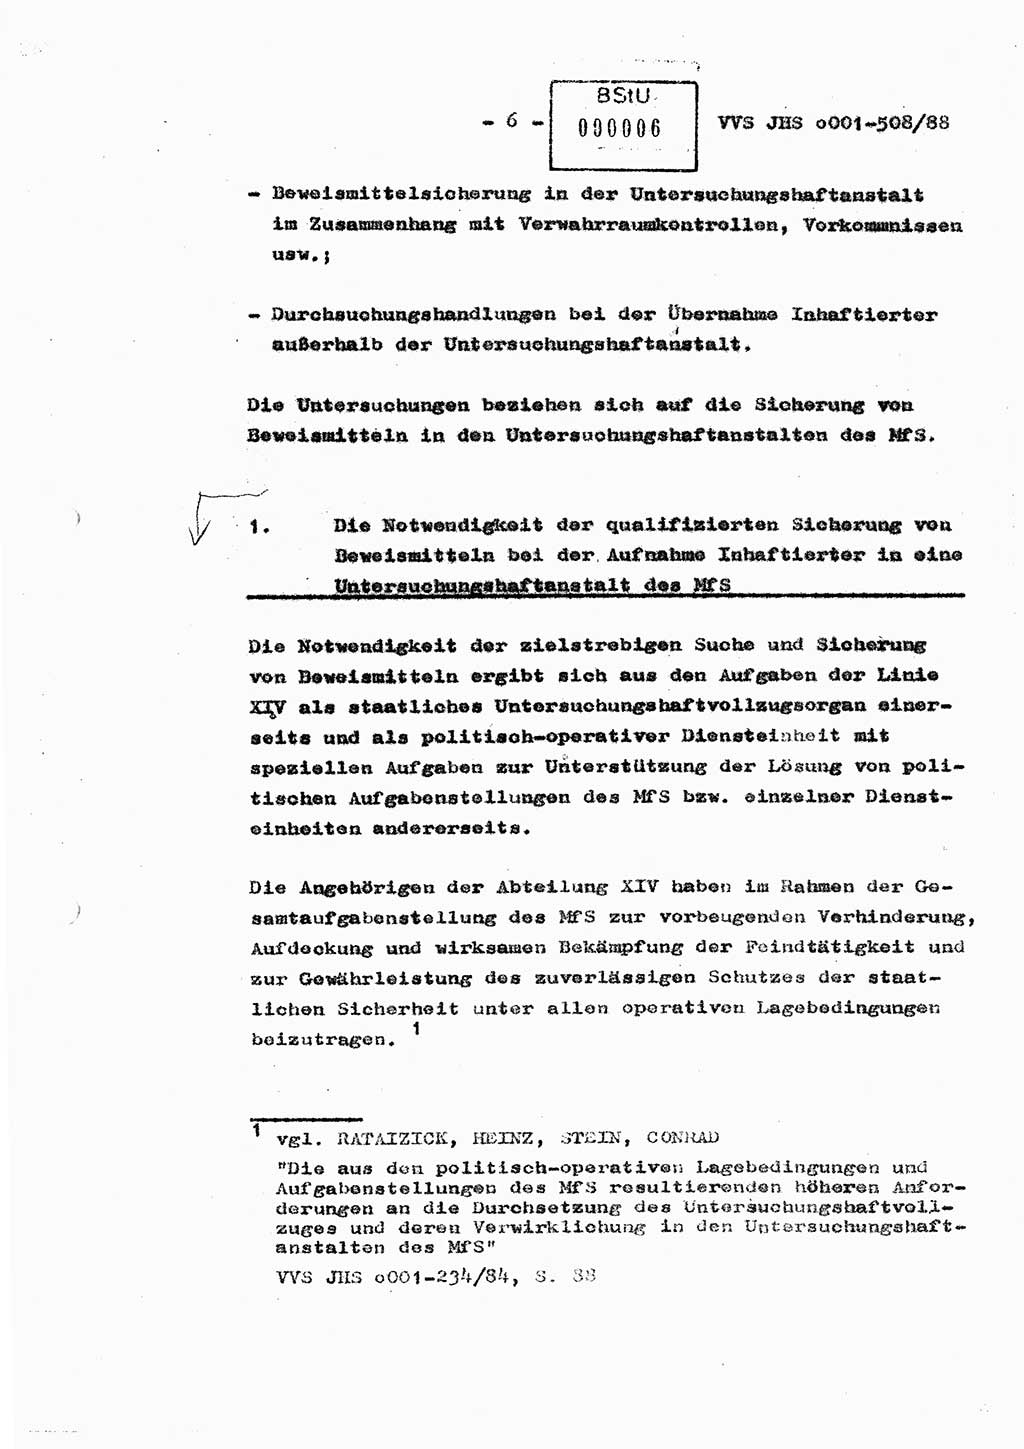 Diplomarbeit Hauptmann Christian Kätzel (Abt. ⅩⅣ), Ministerium für Staatssicherheit (MfS) [Deutsche Demokratische Republik (DDR)], Juristische Hochschule (JHS), Vertrauliche Verschlußsache (VVS) o001-508/88, Potsdam 1988, Blatt 6 (Dipl.-Arb. MfS DDR JHS VVS o001-508/88 1988, Bl. 6)